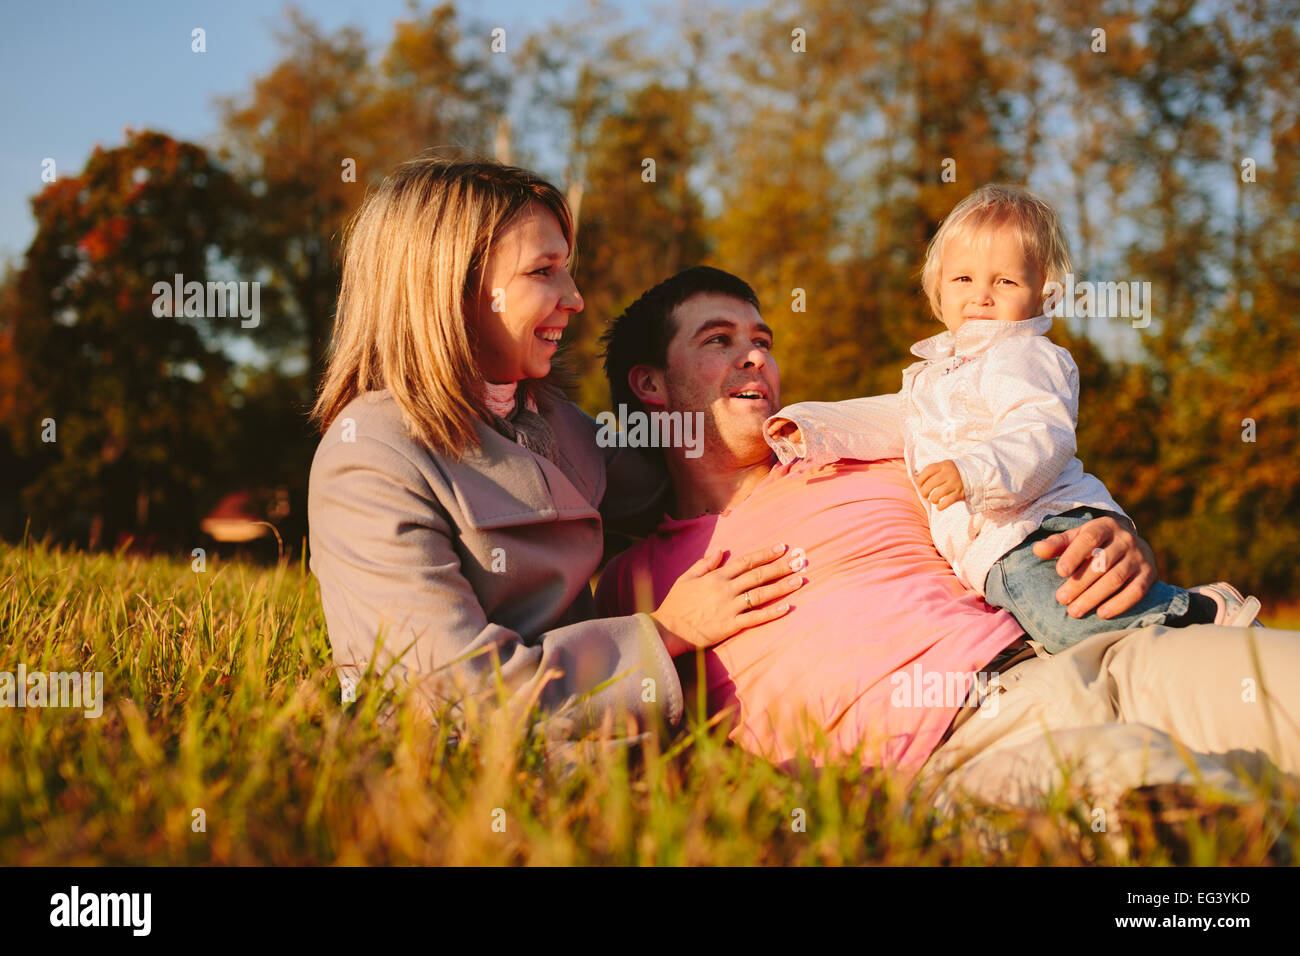 Family Life Friends Enjoy Moment Stock Image - Image of enjoy, living:  134642711